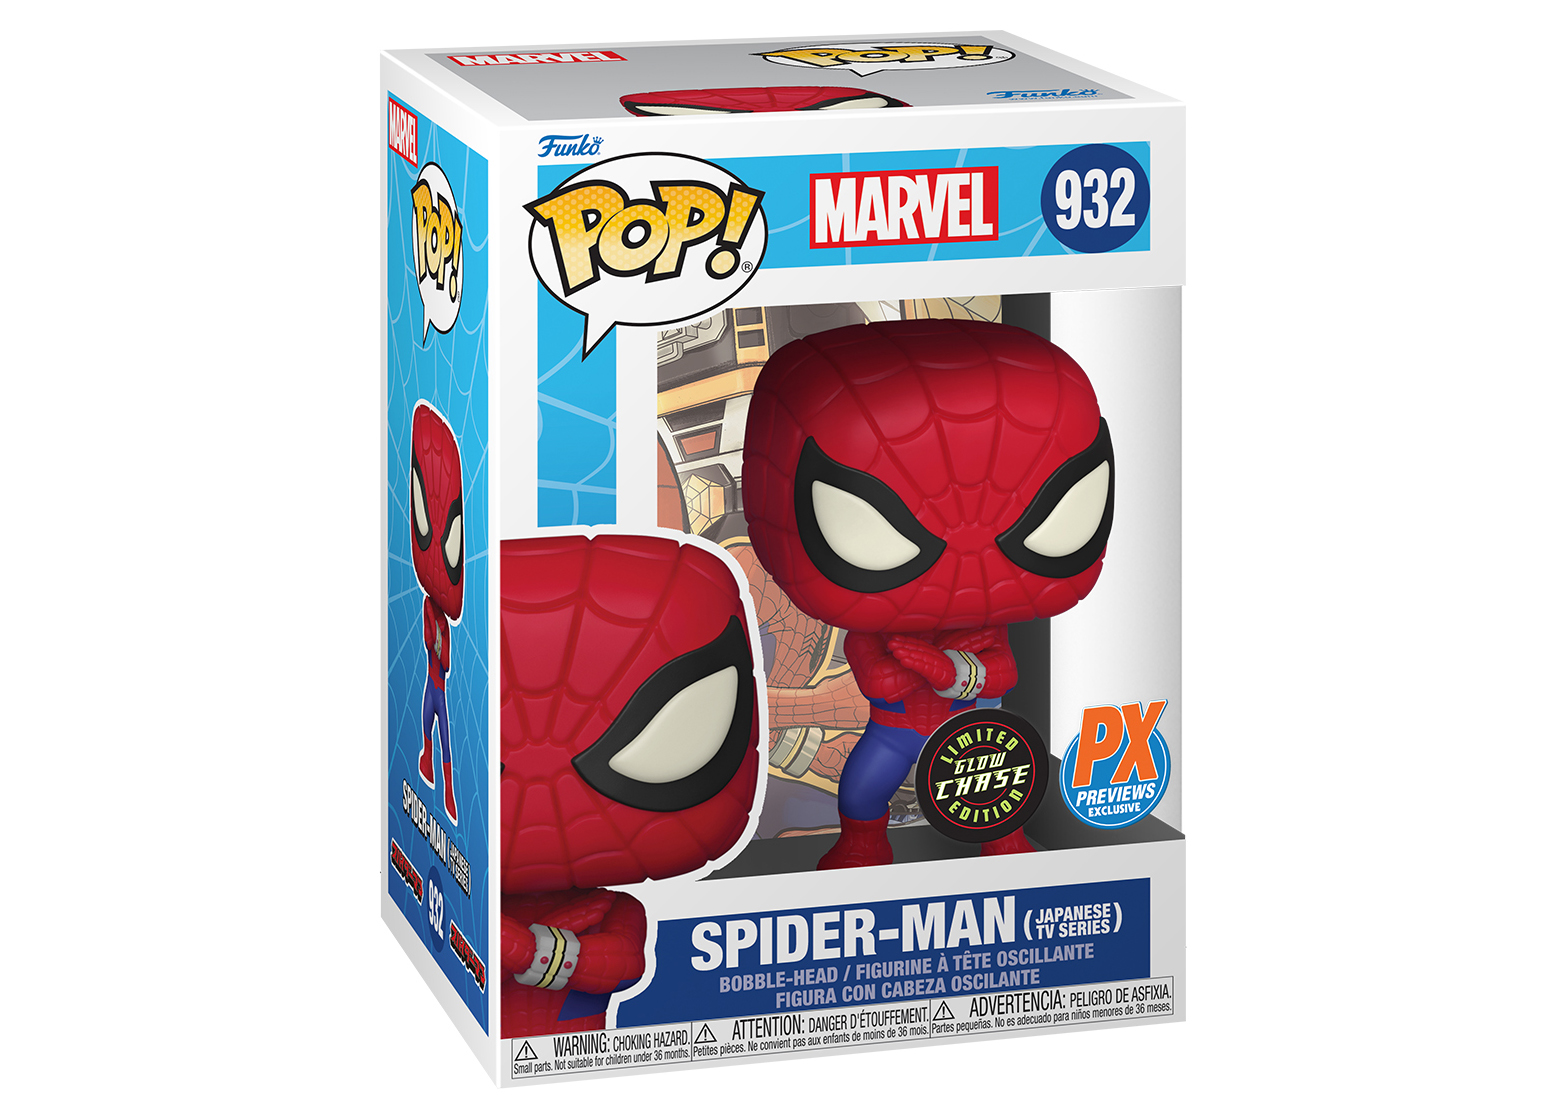 Funko Pop! Marvel Spider-Man (Japanese TV Series) PX Previews GITD